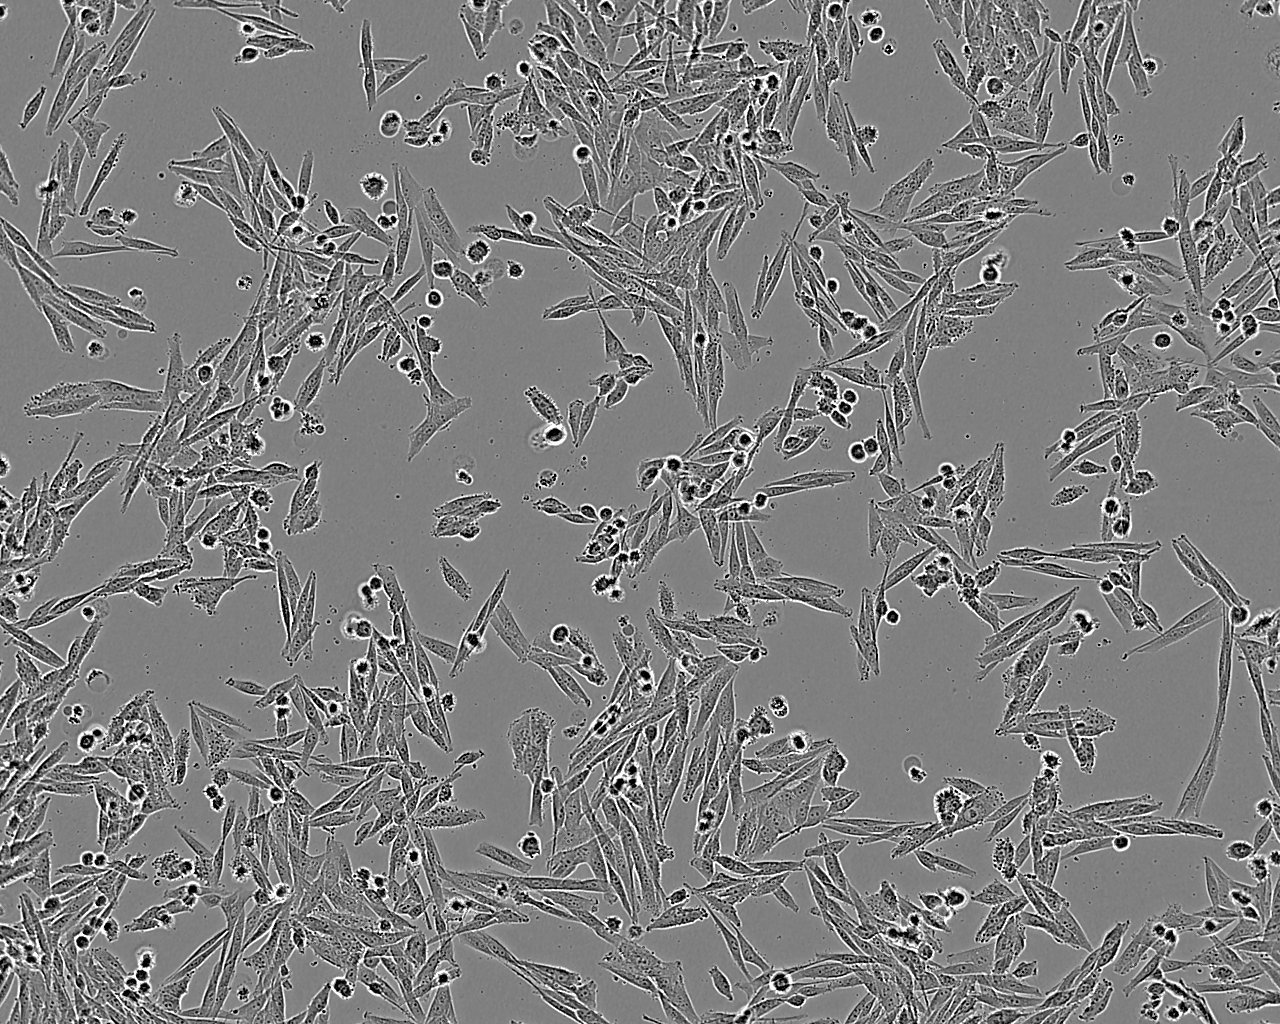 MIN6 Cell:小鼠胰岛β细胞系